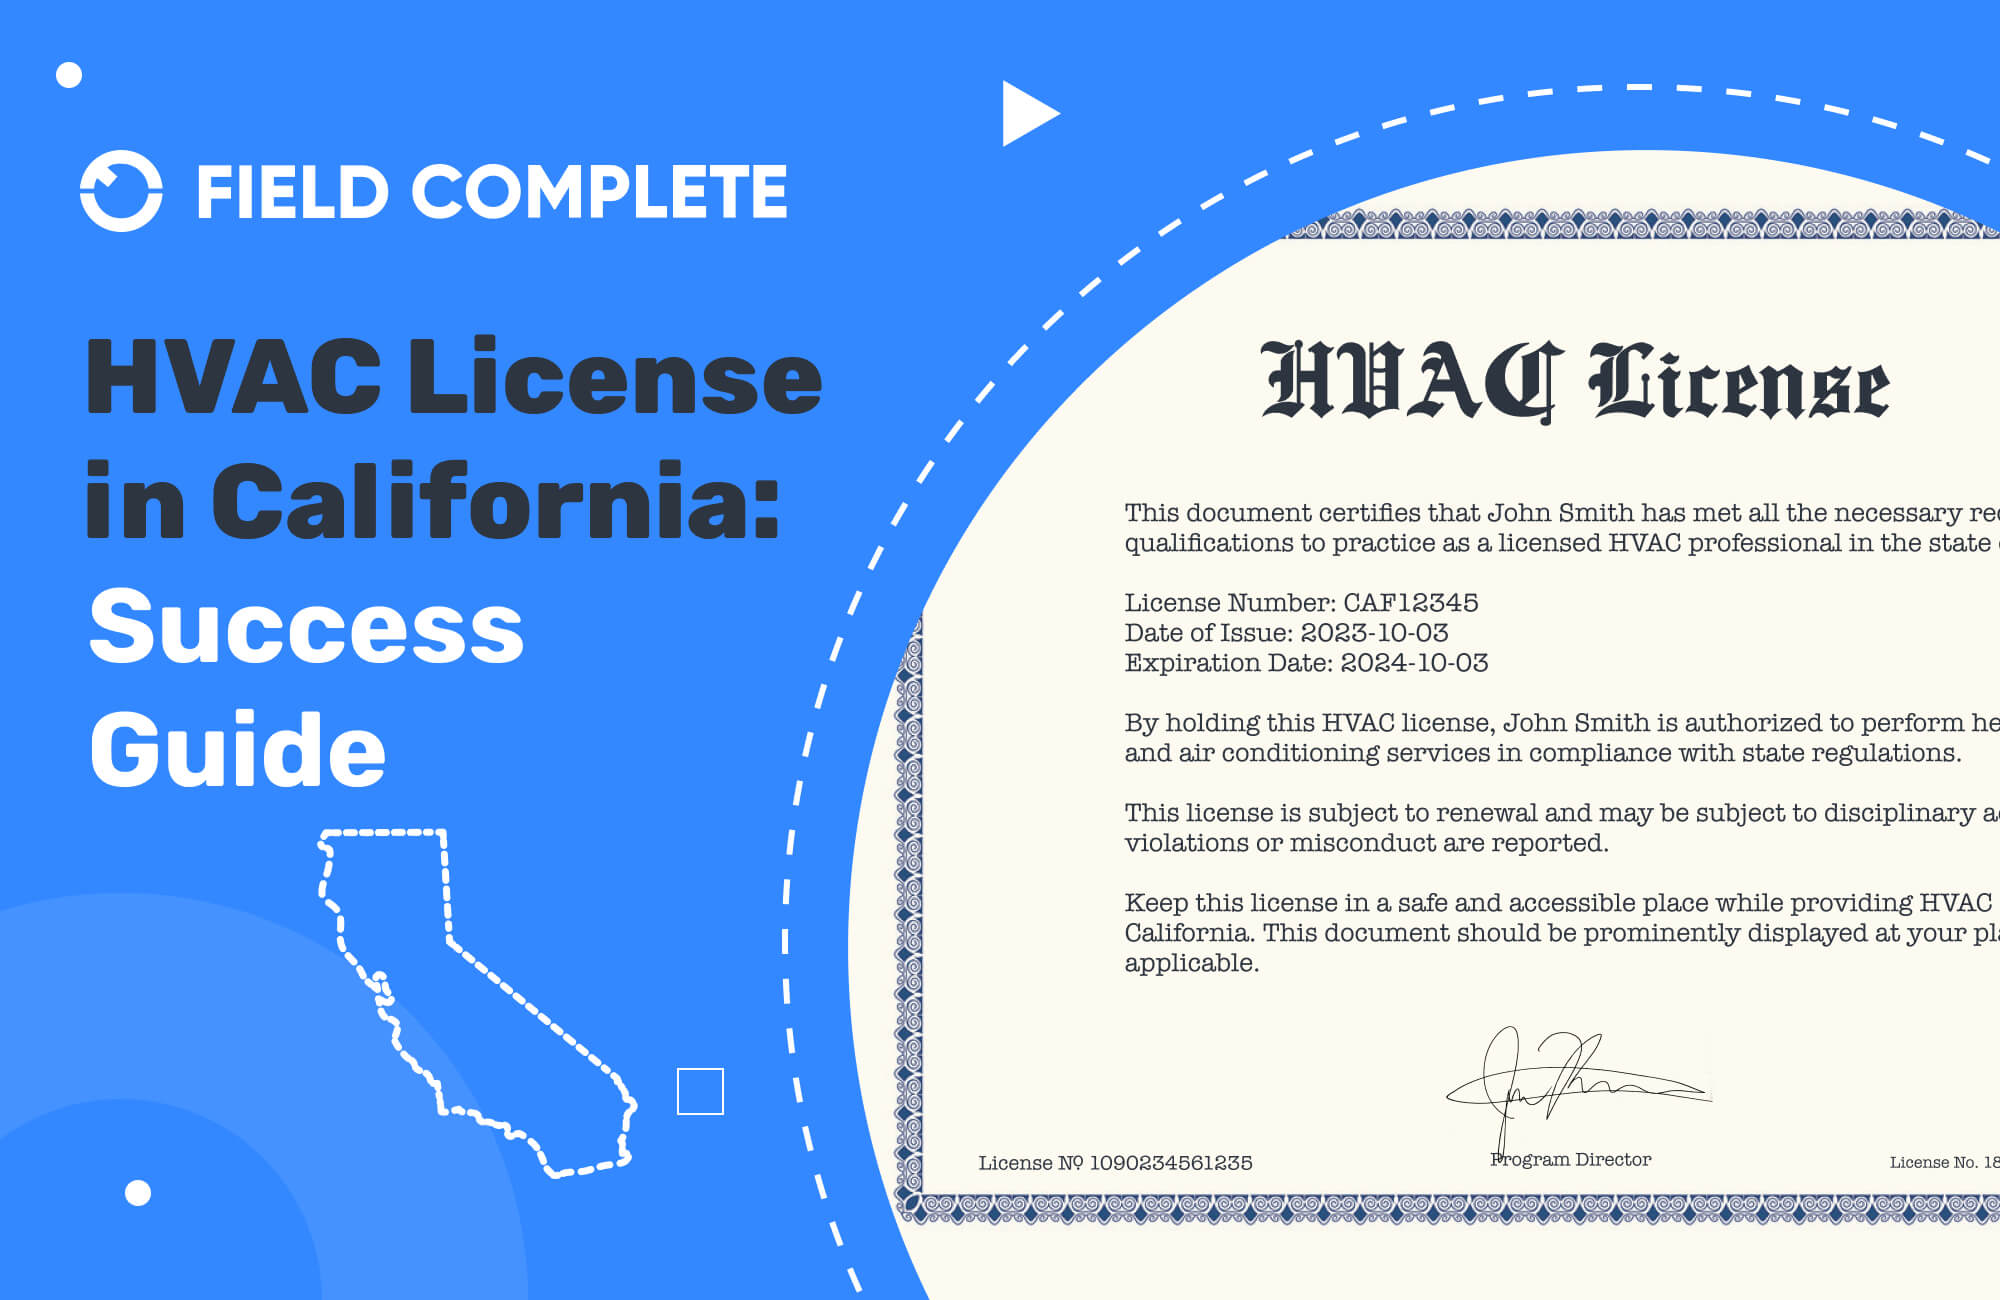 Obtaining Your HVAC License in California fieldcomplete com